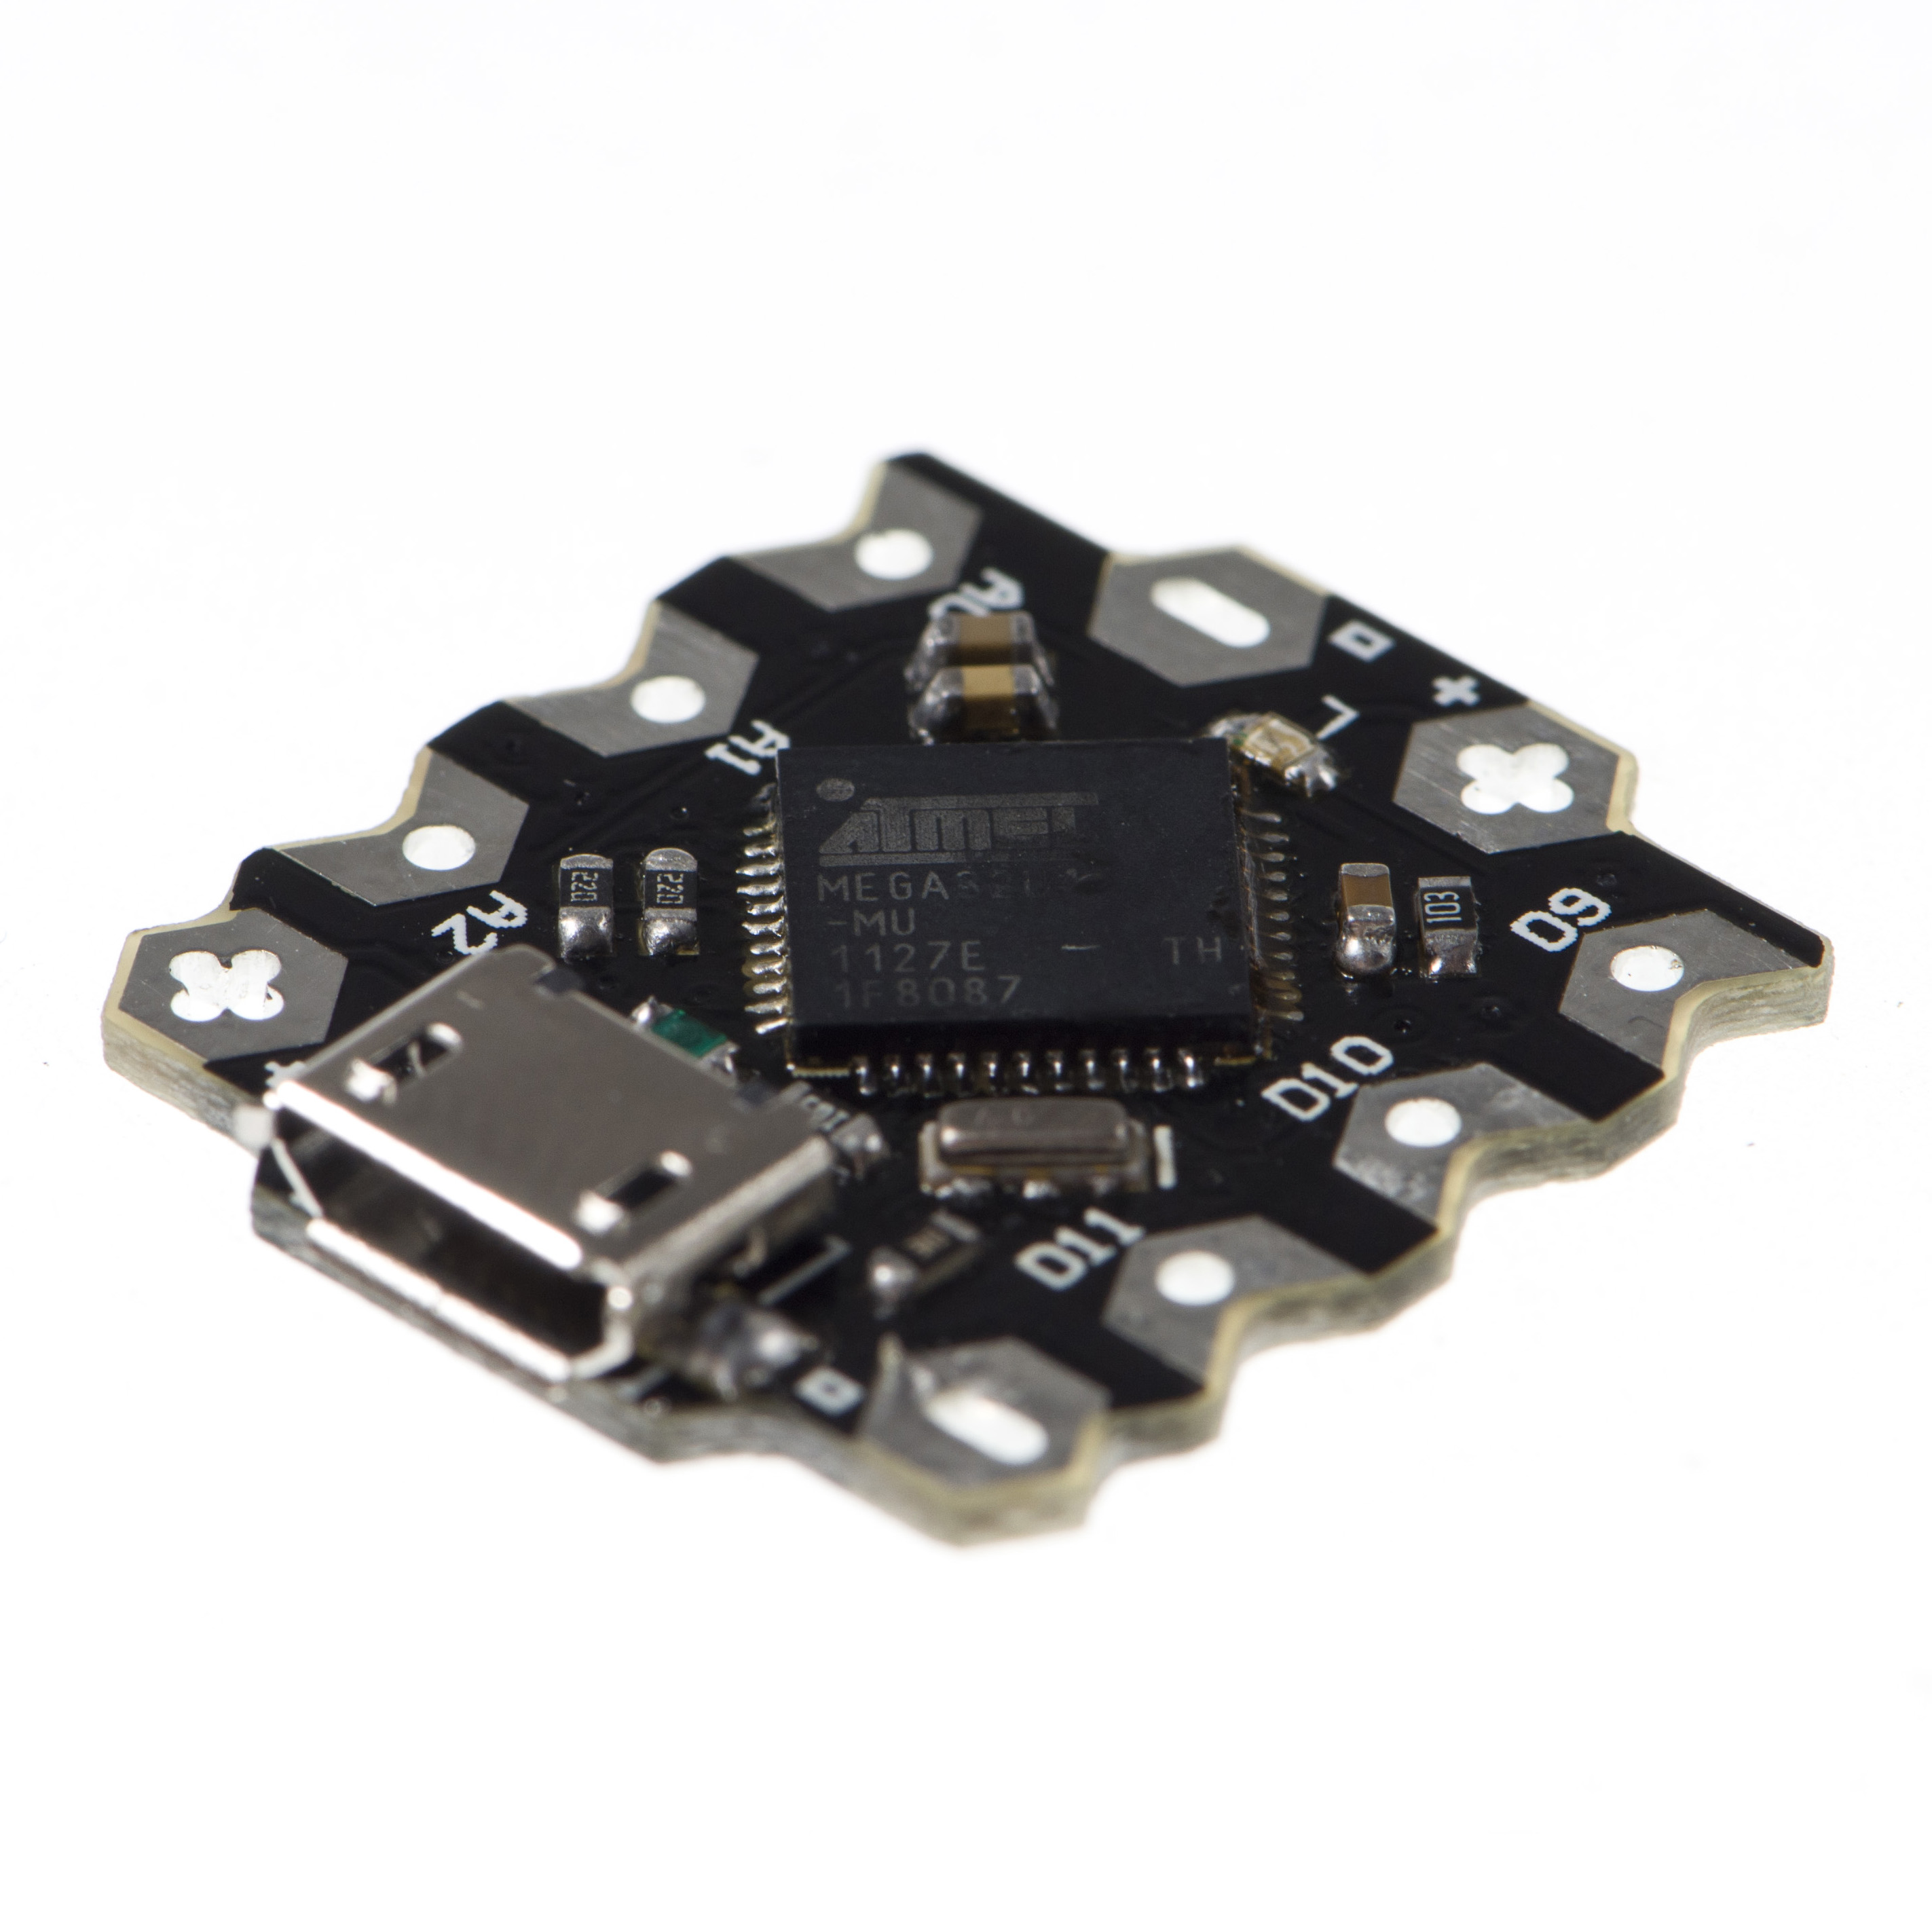 DFRobot Beetle - The Smallest Arduino Board